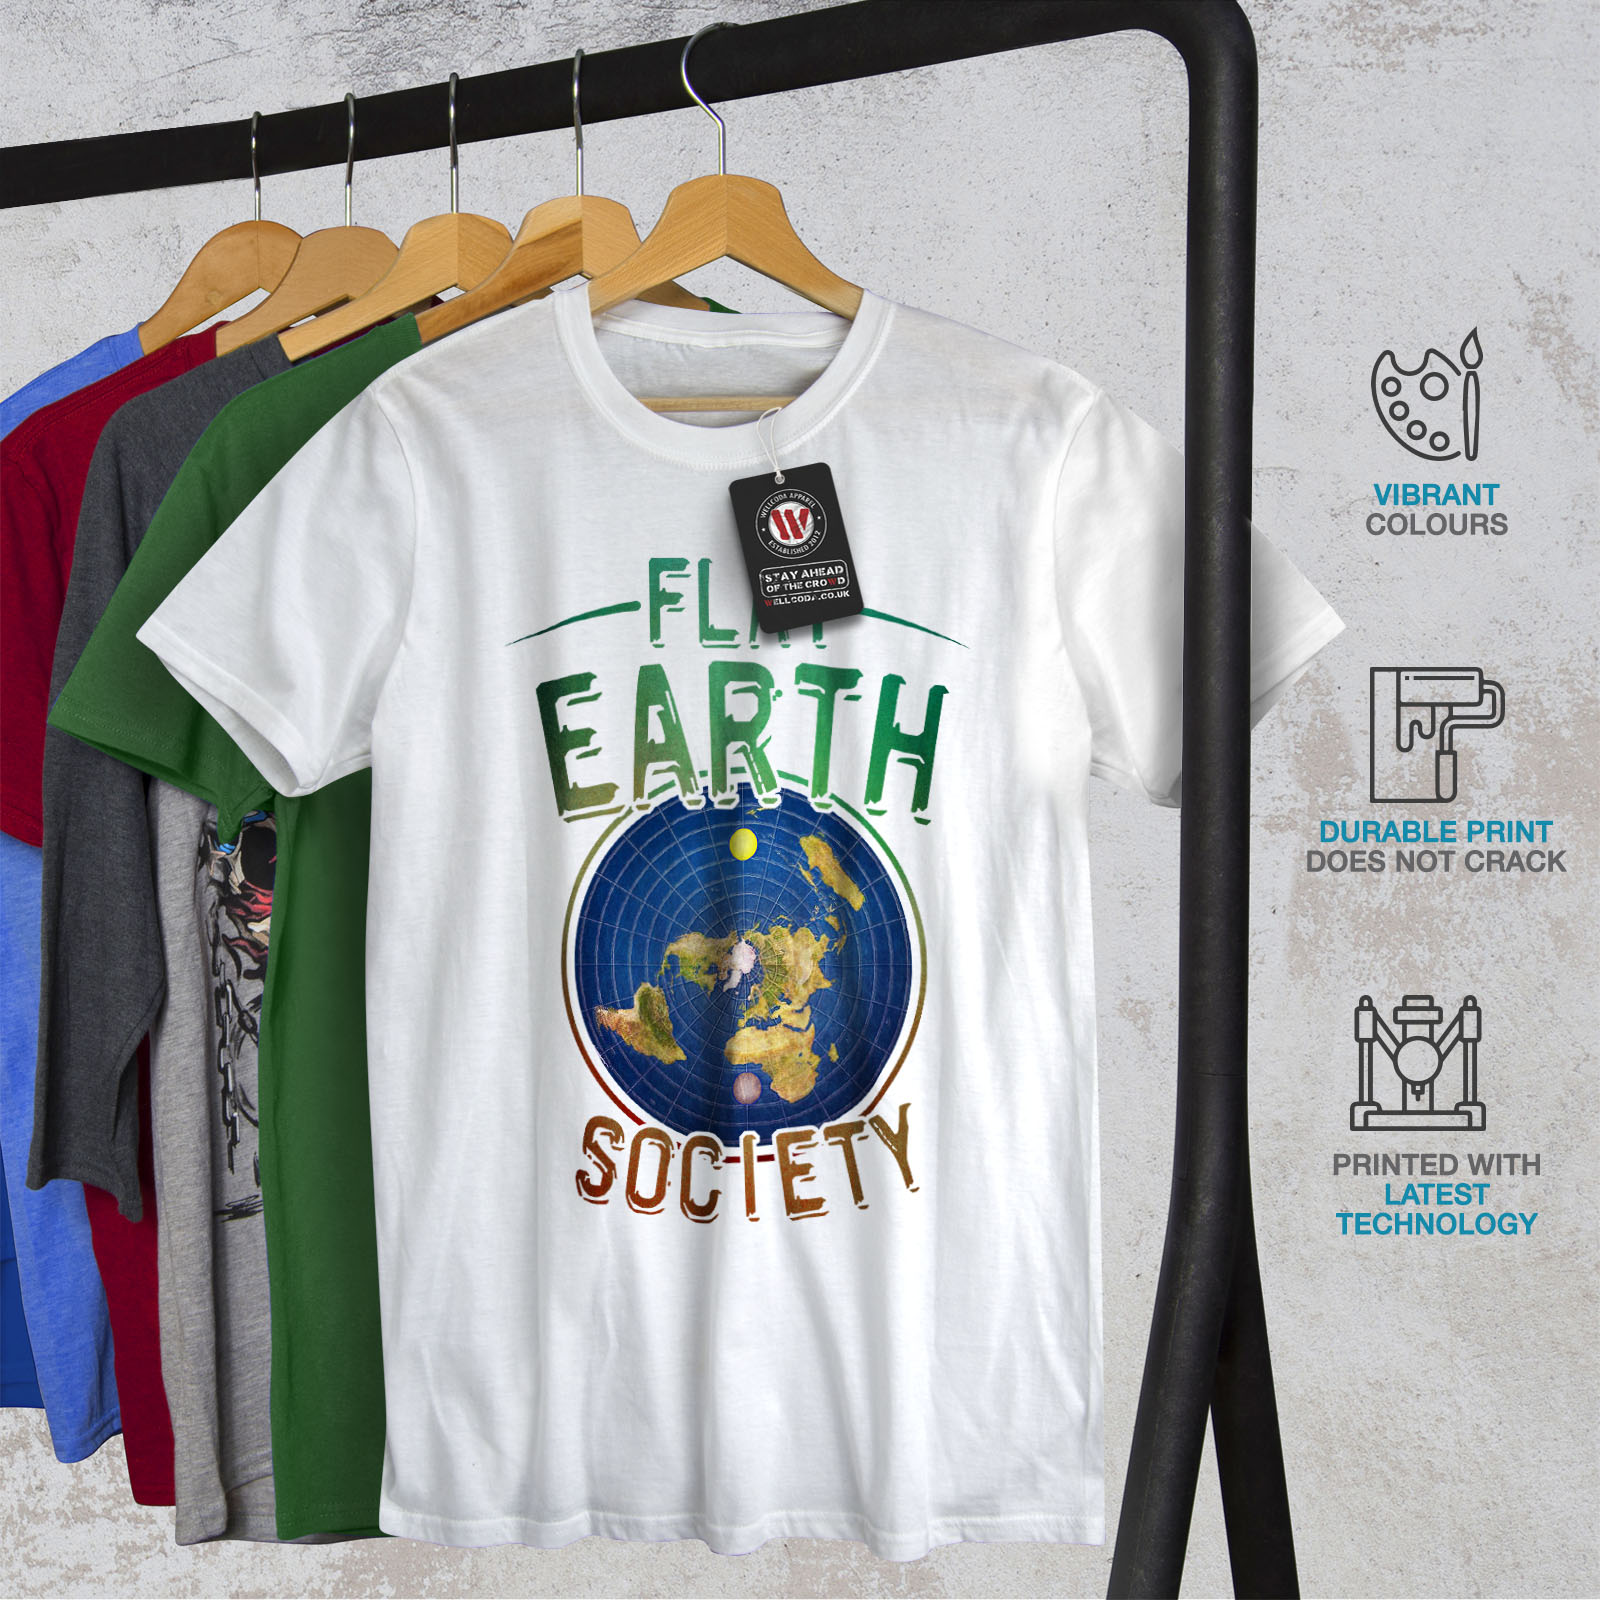 flat earth society t shirt